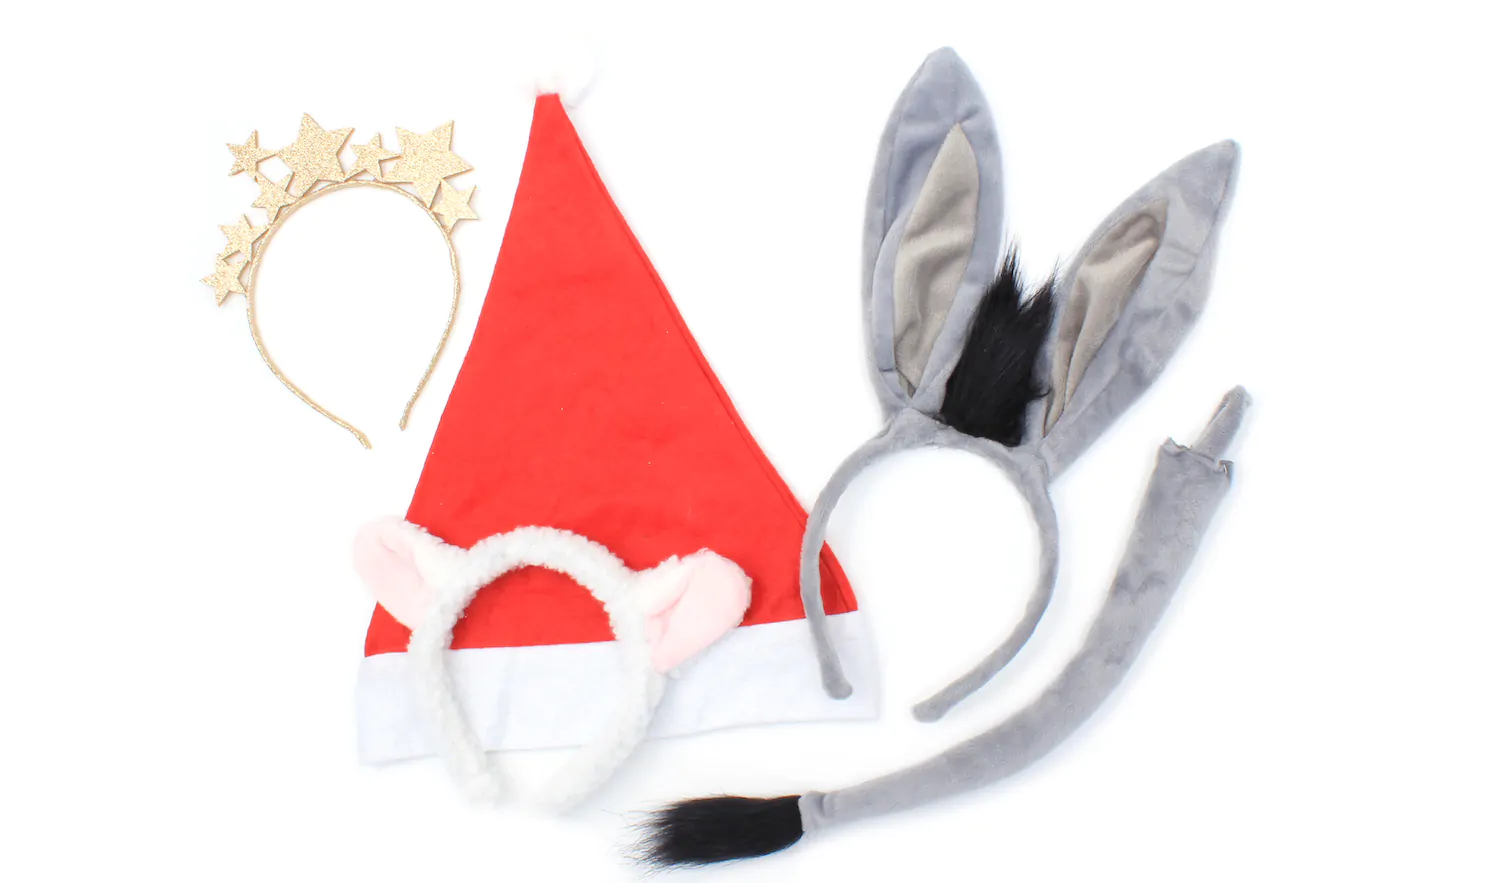 Santa hat, donkey ears and tail, lambs ears, and a gold festive headband